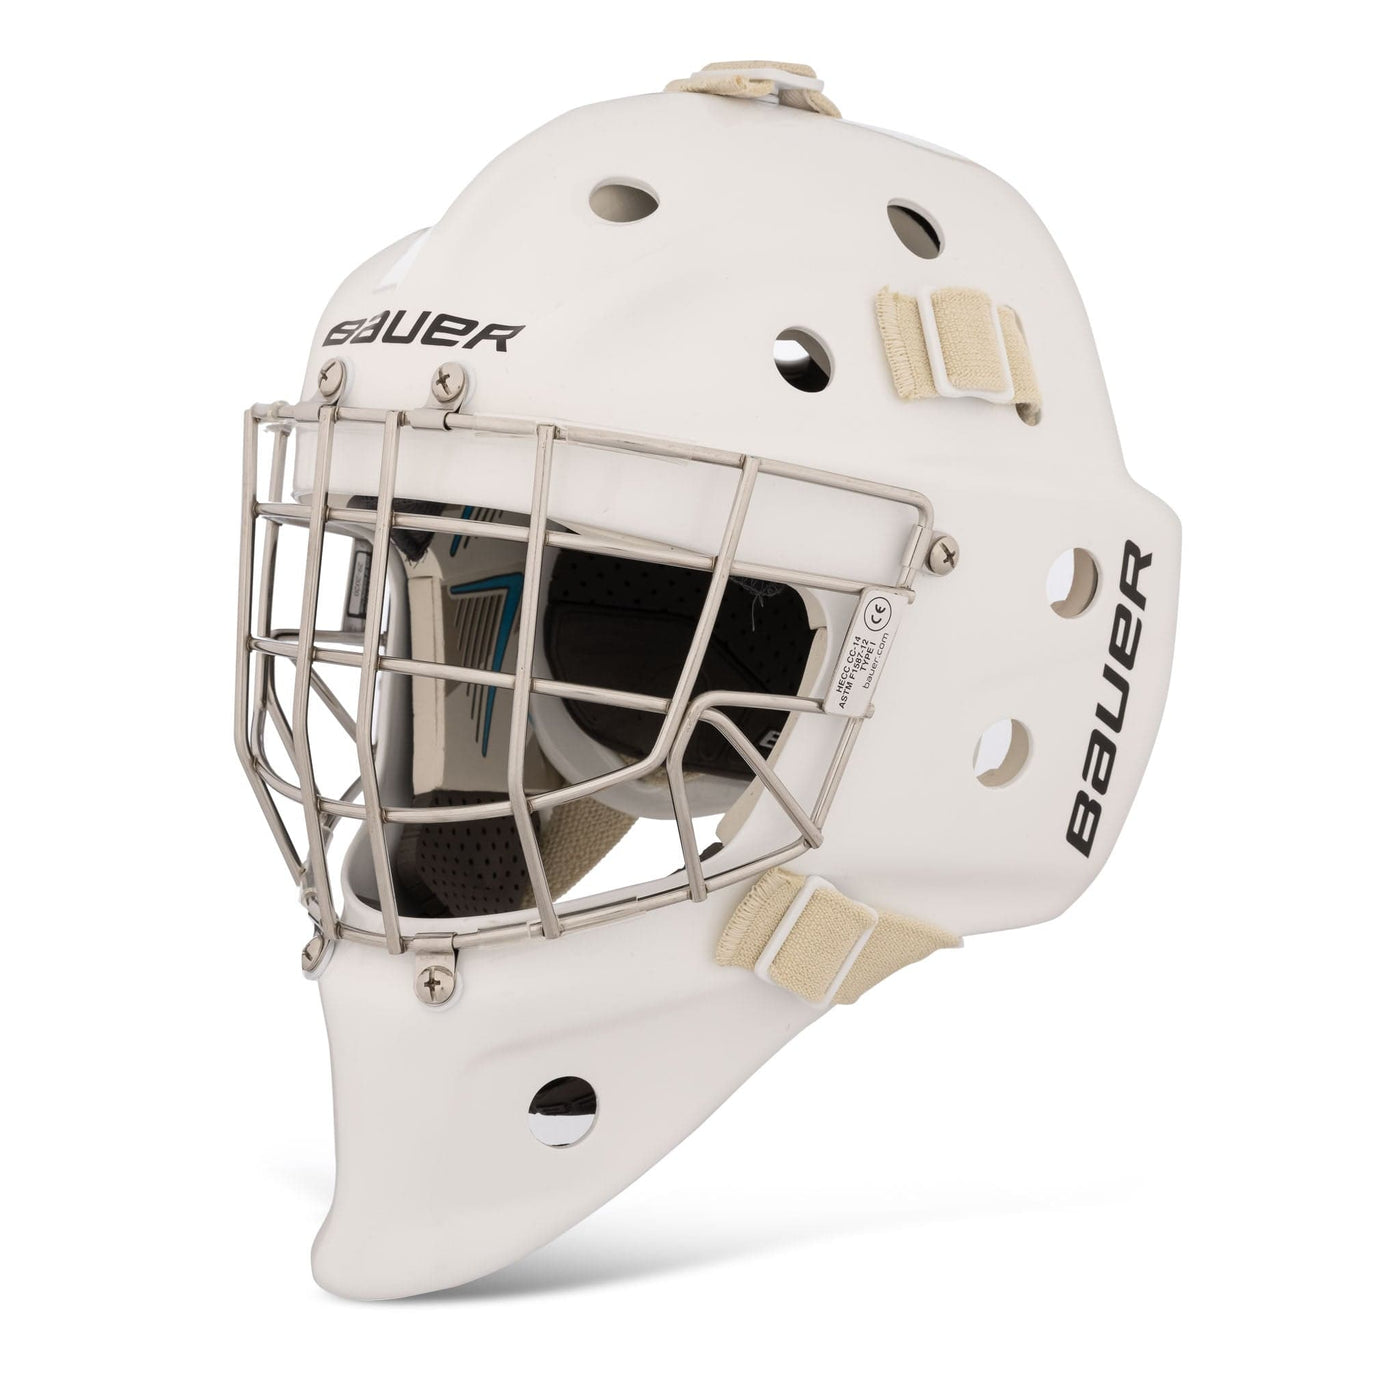 Bauer 940 Senior Goalie Mask